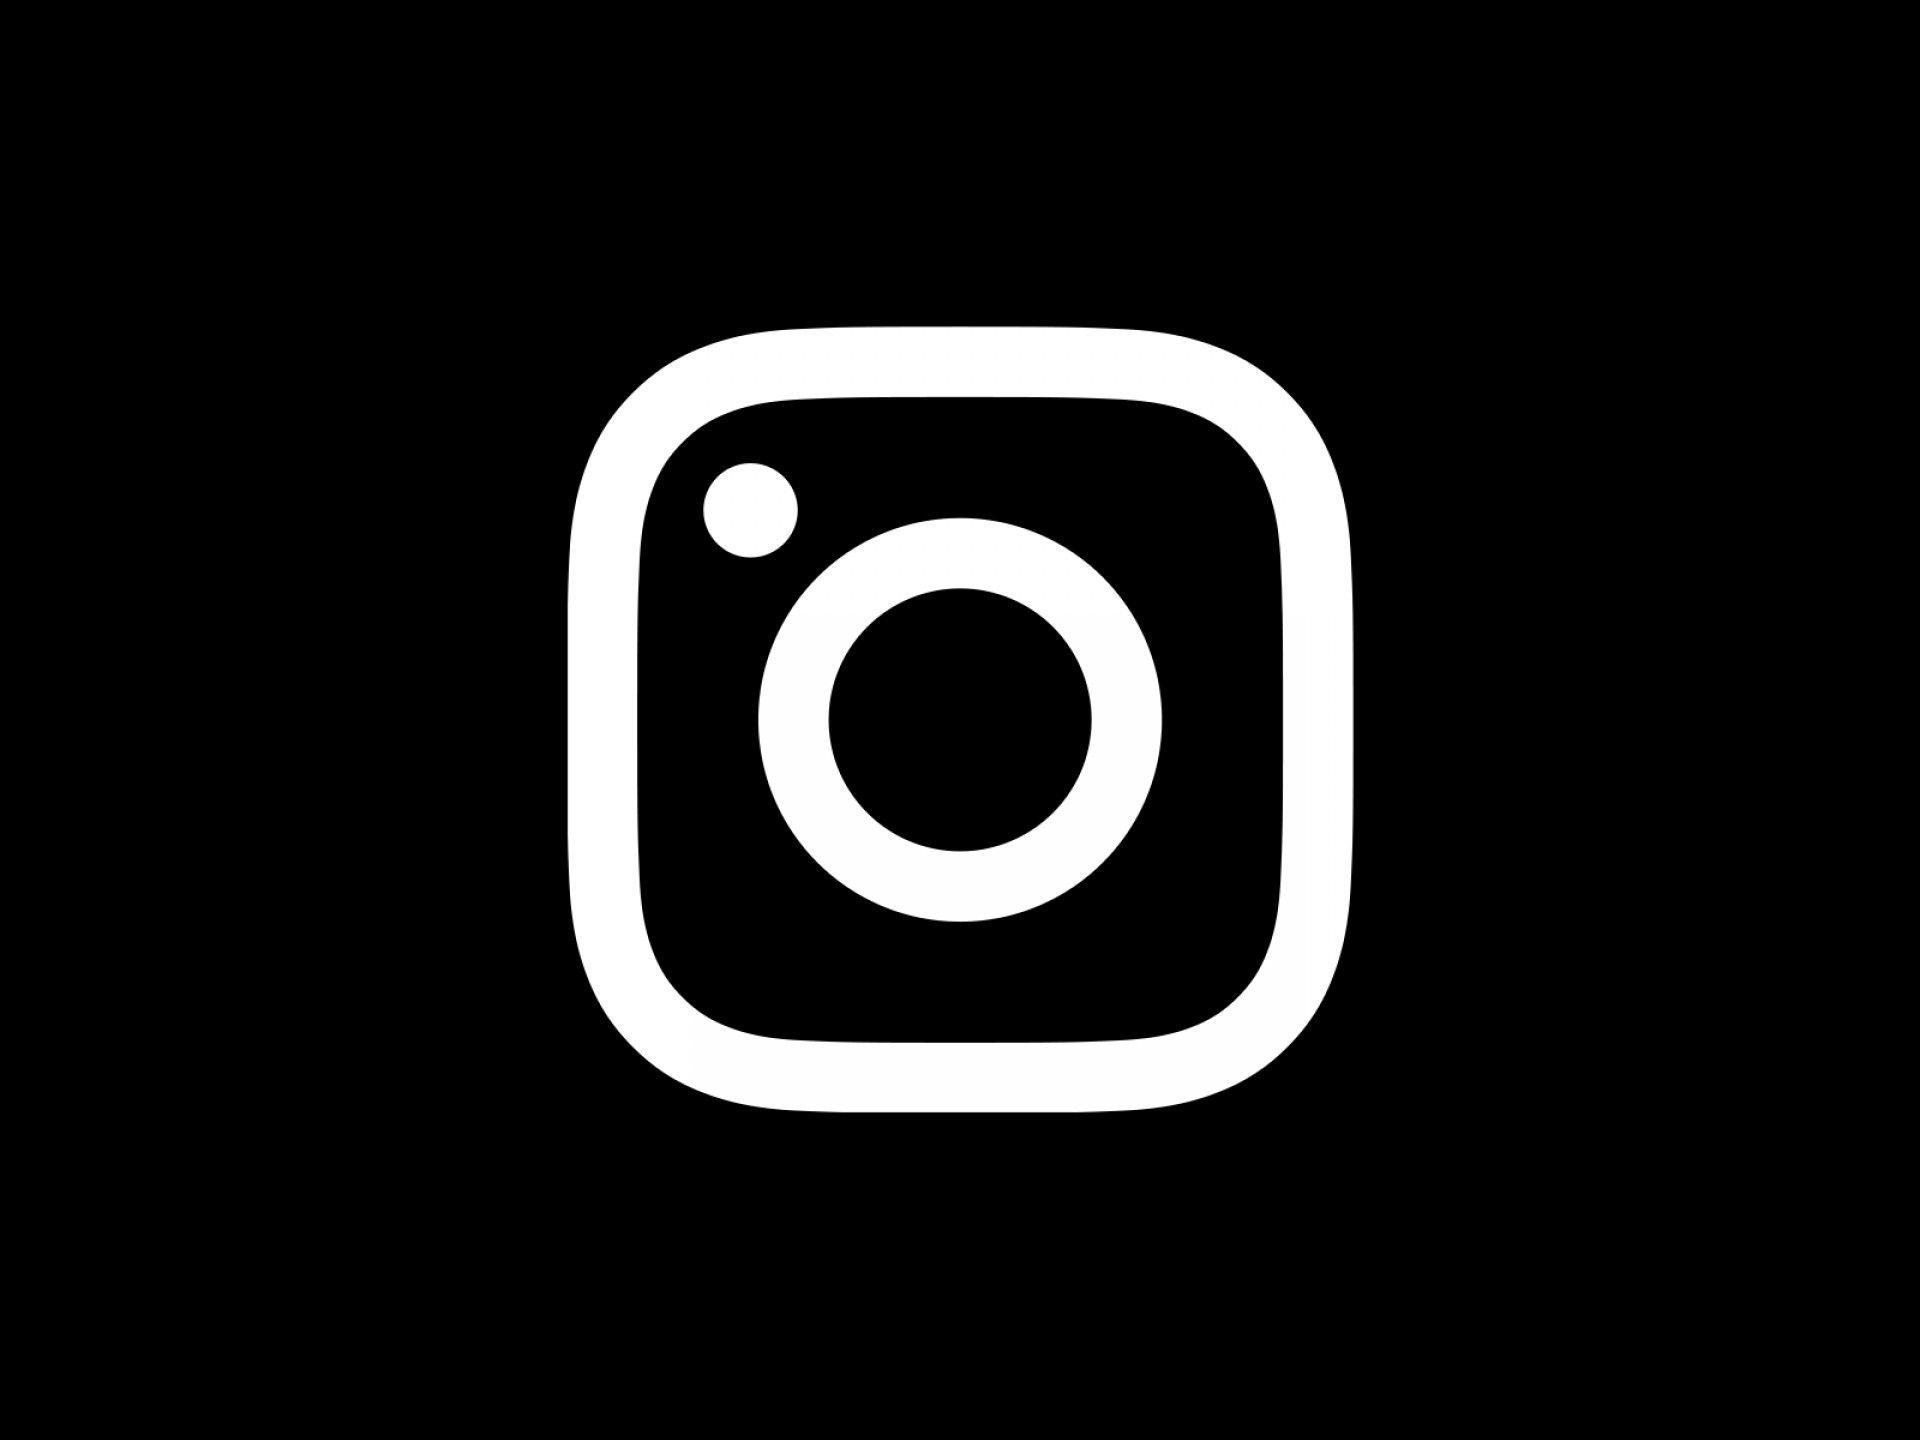 Instagram Logo Vector Icon Free Download. SOIDERGI. Instagram